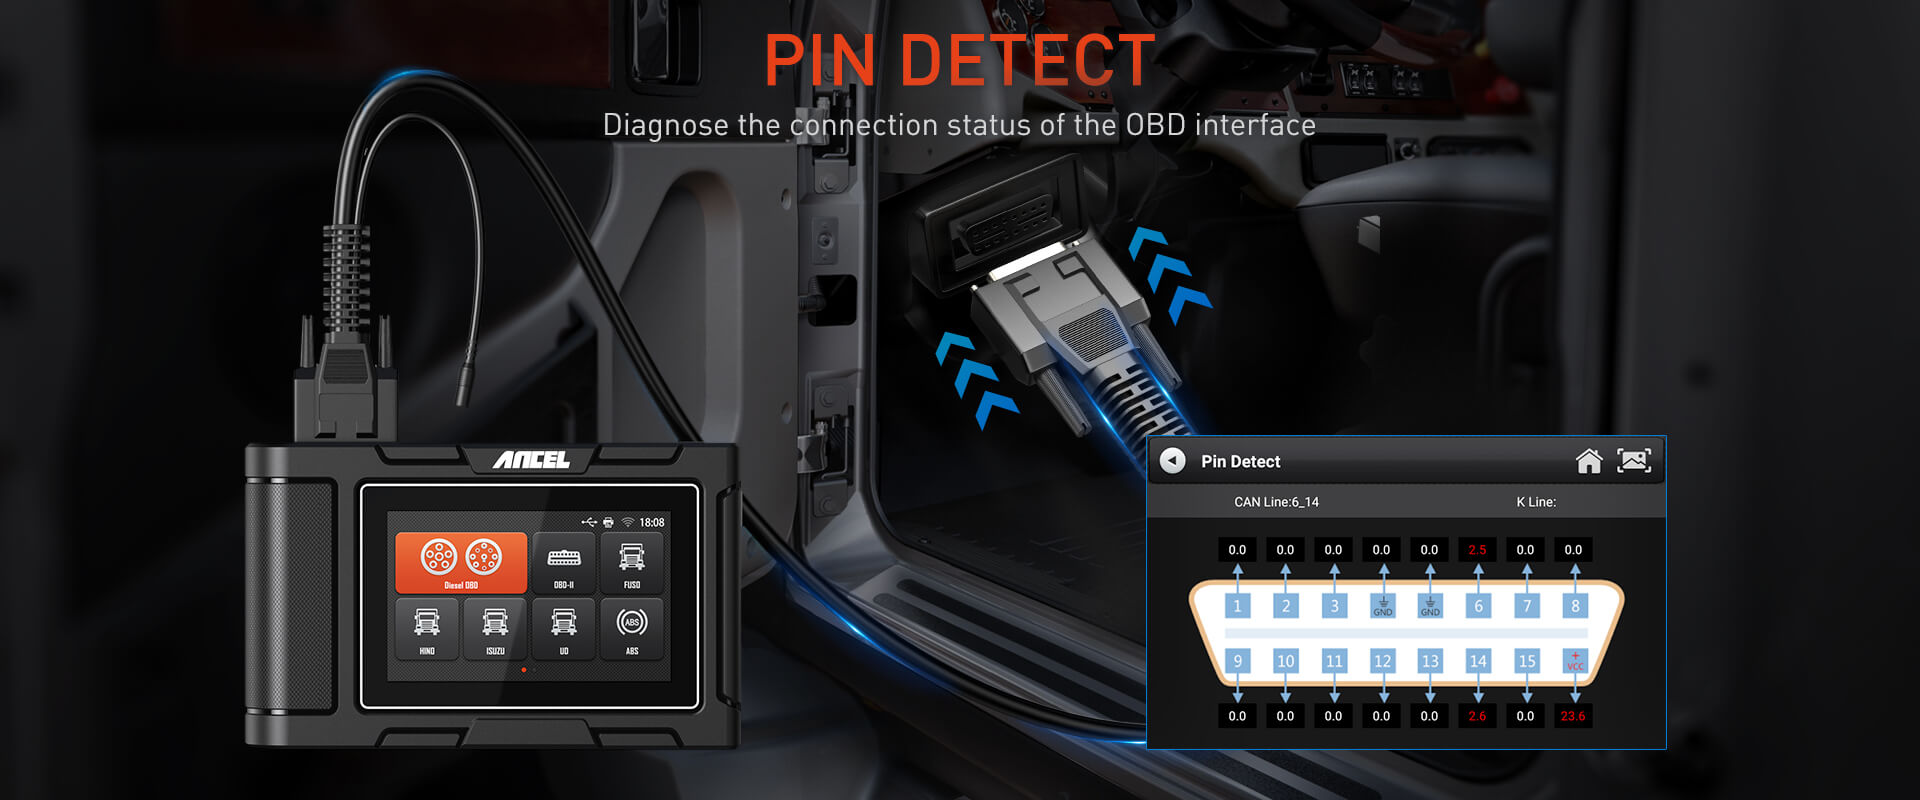 Pin Detect Function